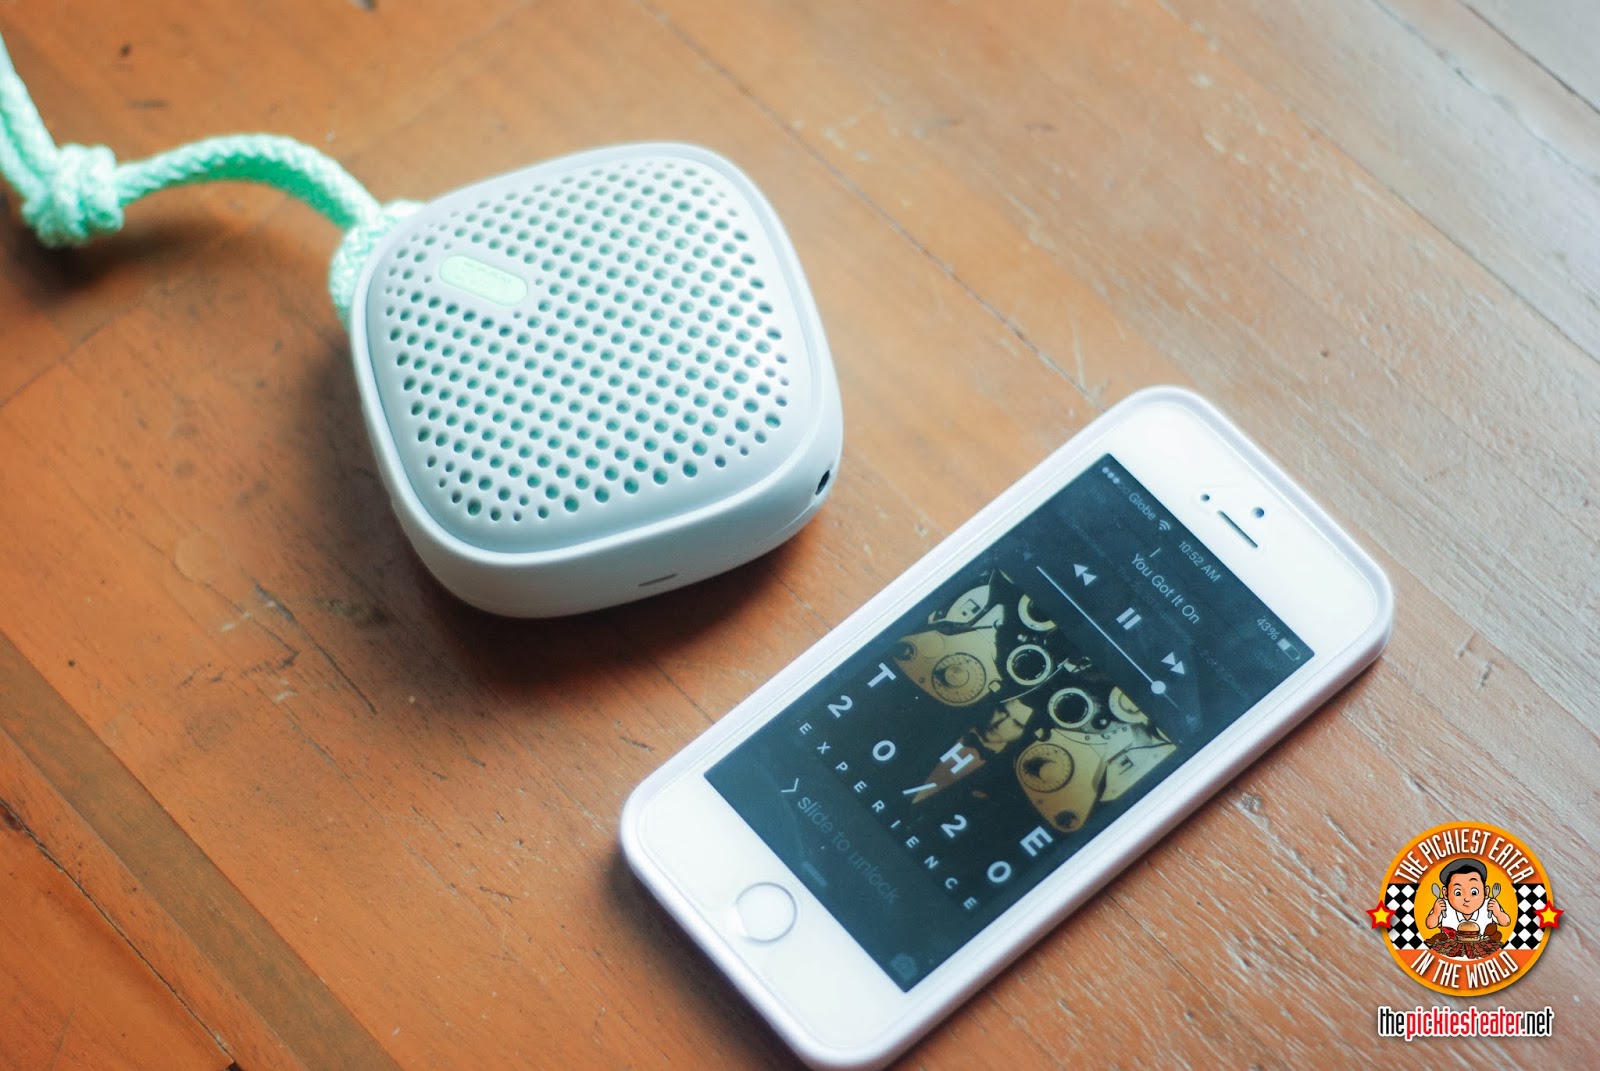 Nude Audio Move S Portable Bluetooth speaker